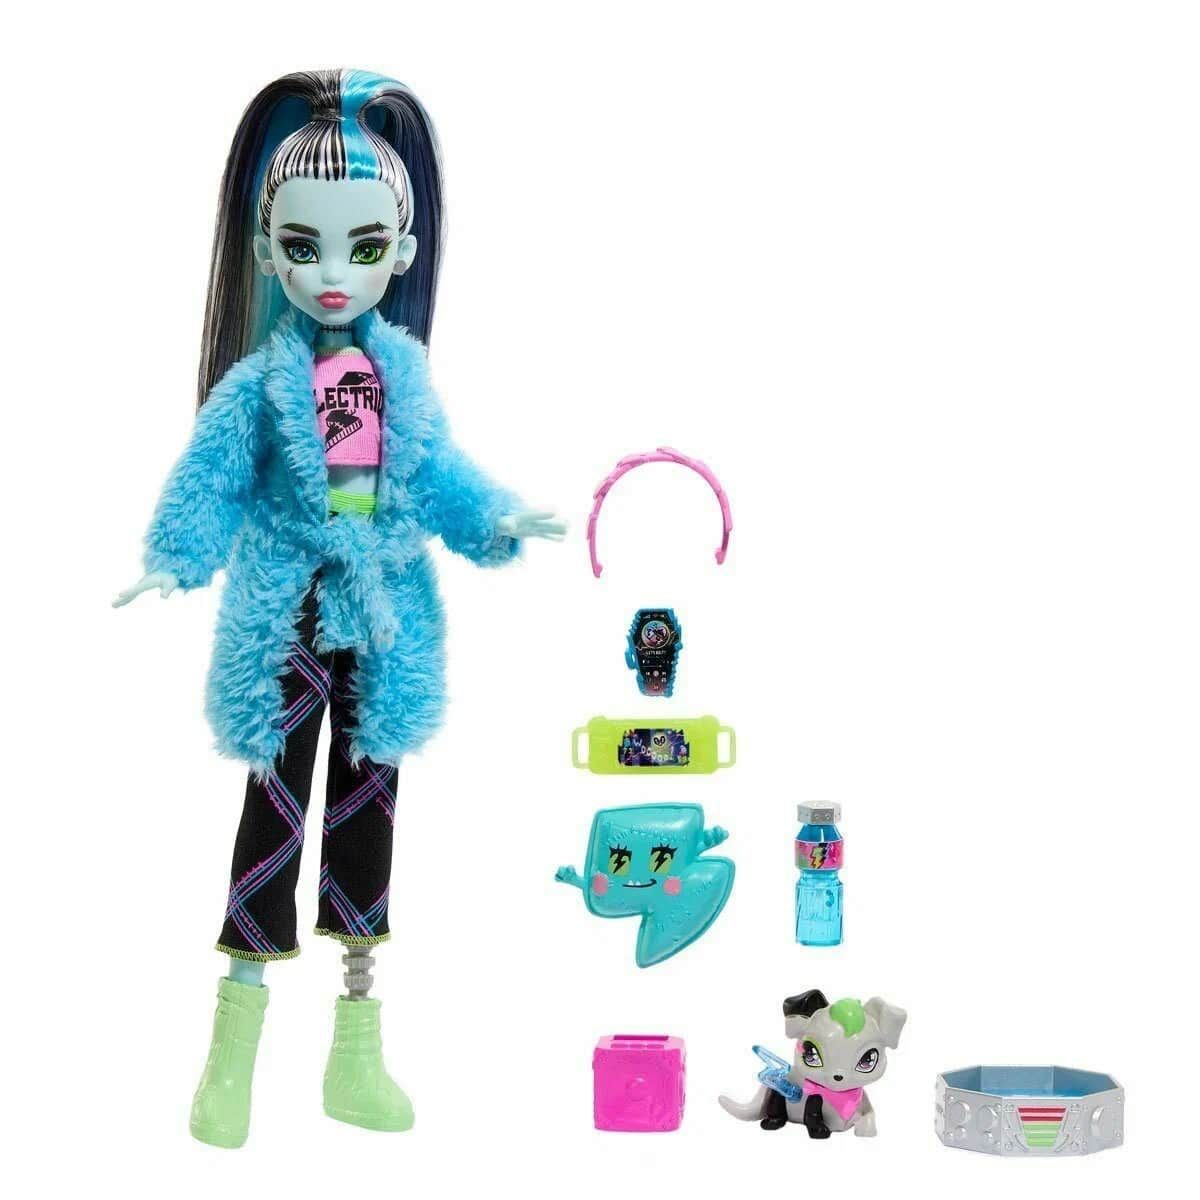 Кукла Monster High Френки Штейн Пижамная вечеринка, HKY68